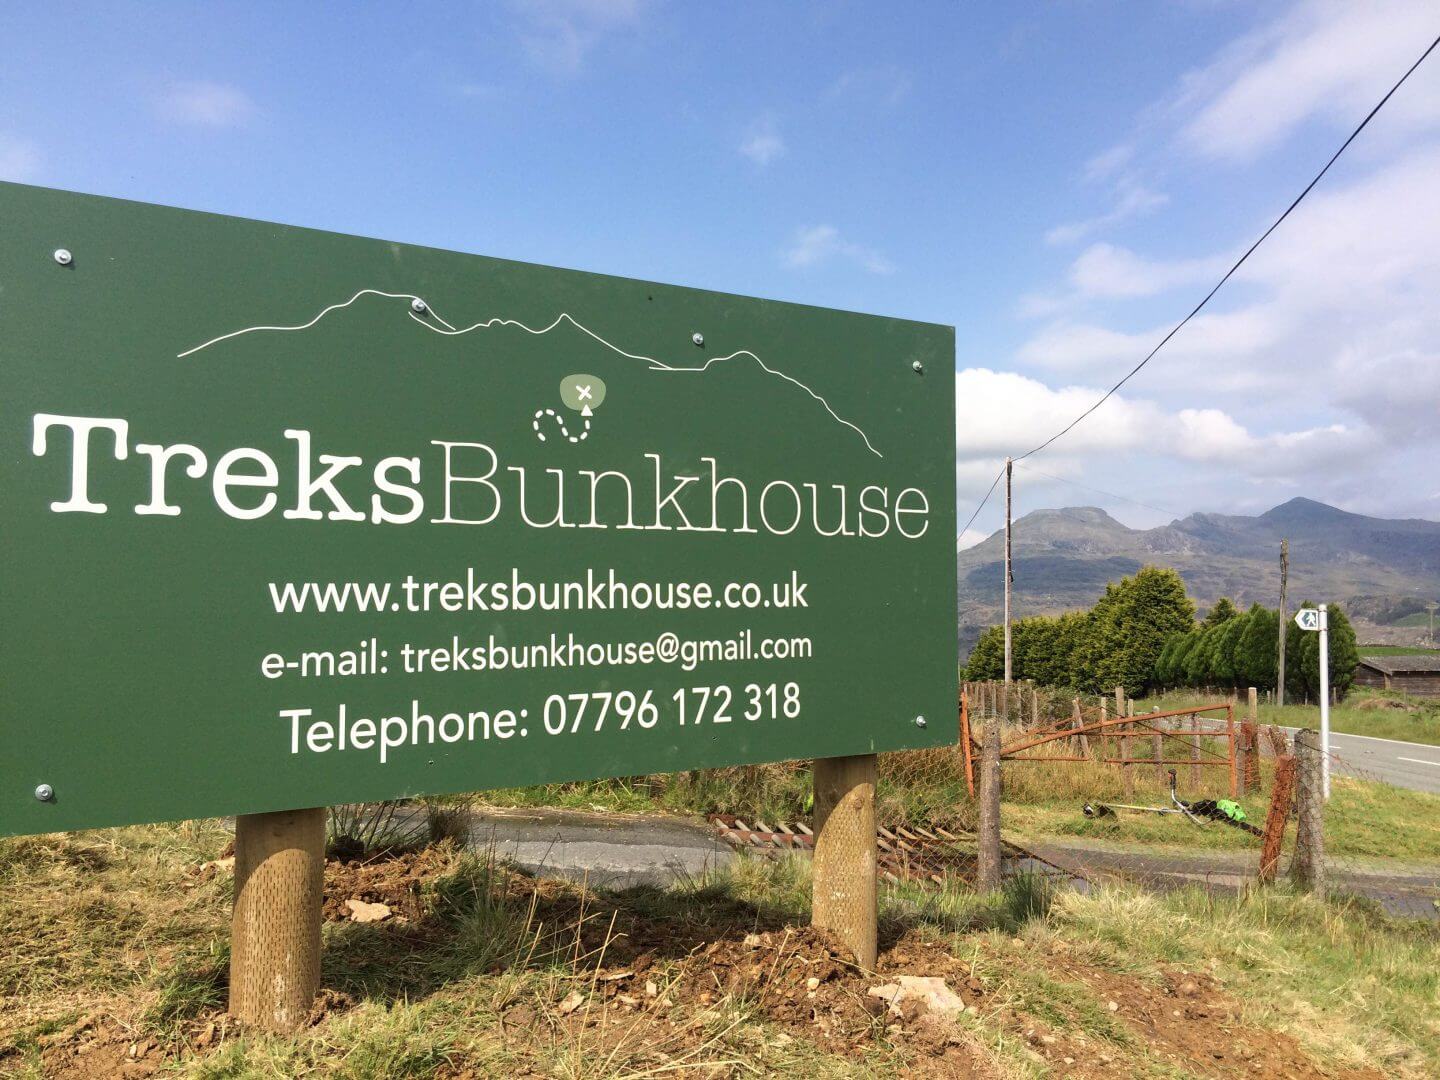 Treks Bunkhouse in Snowdonia